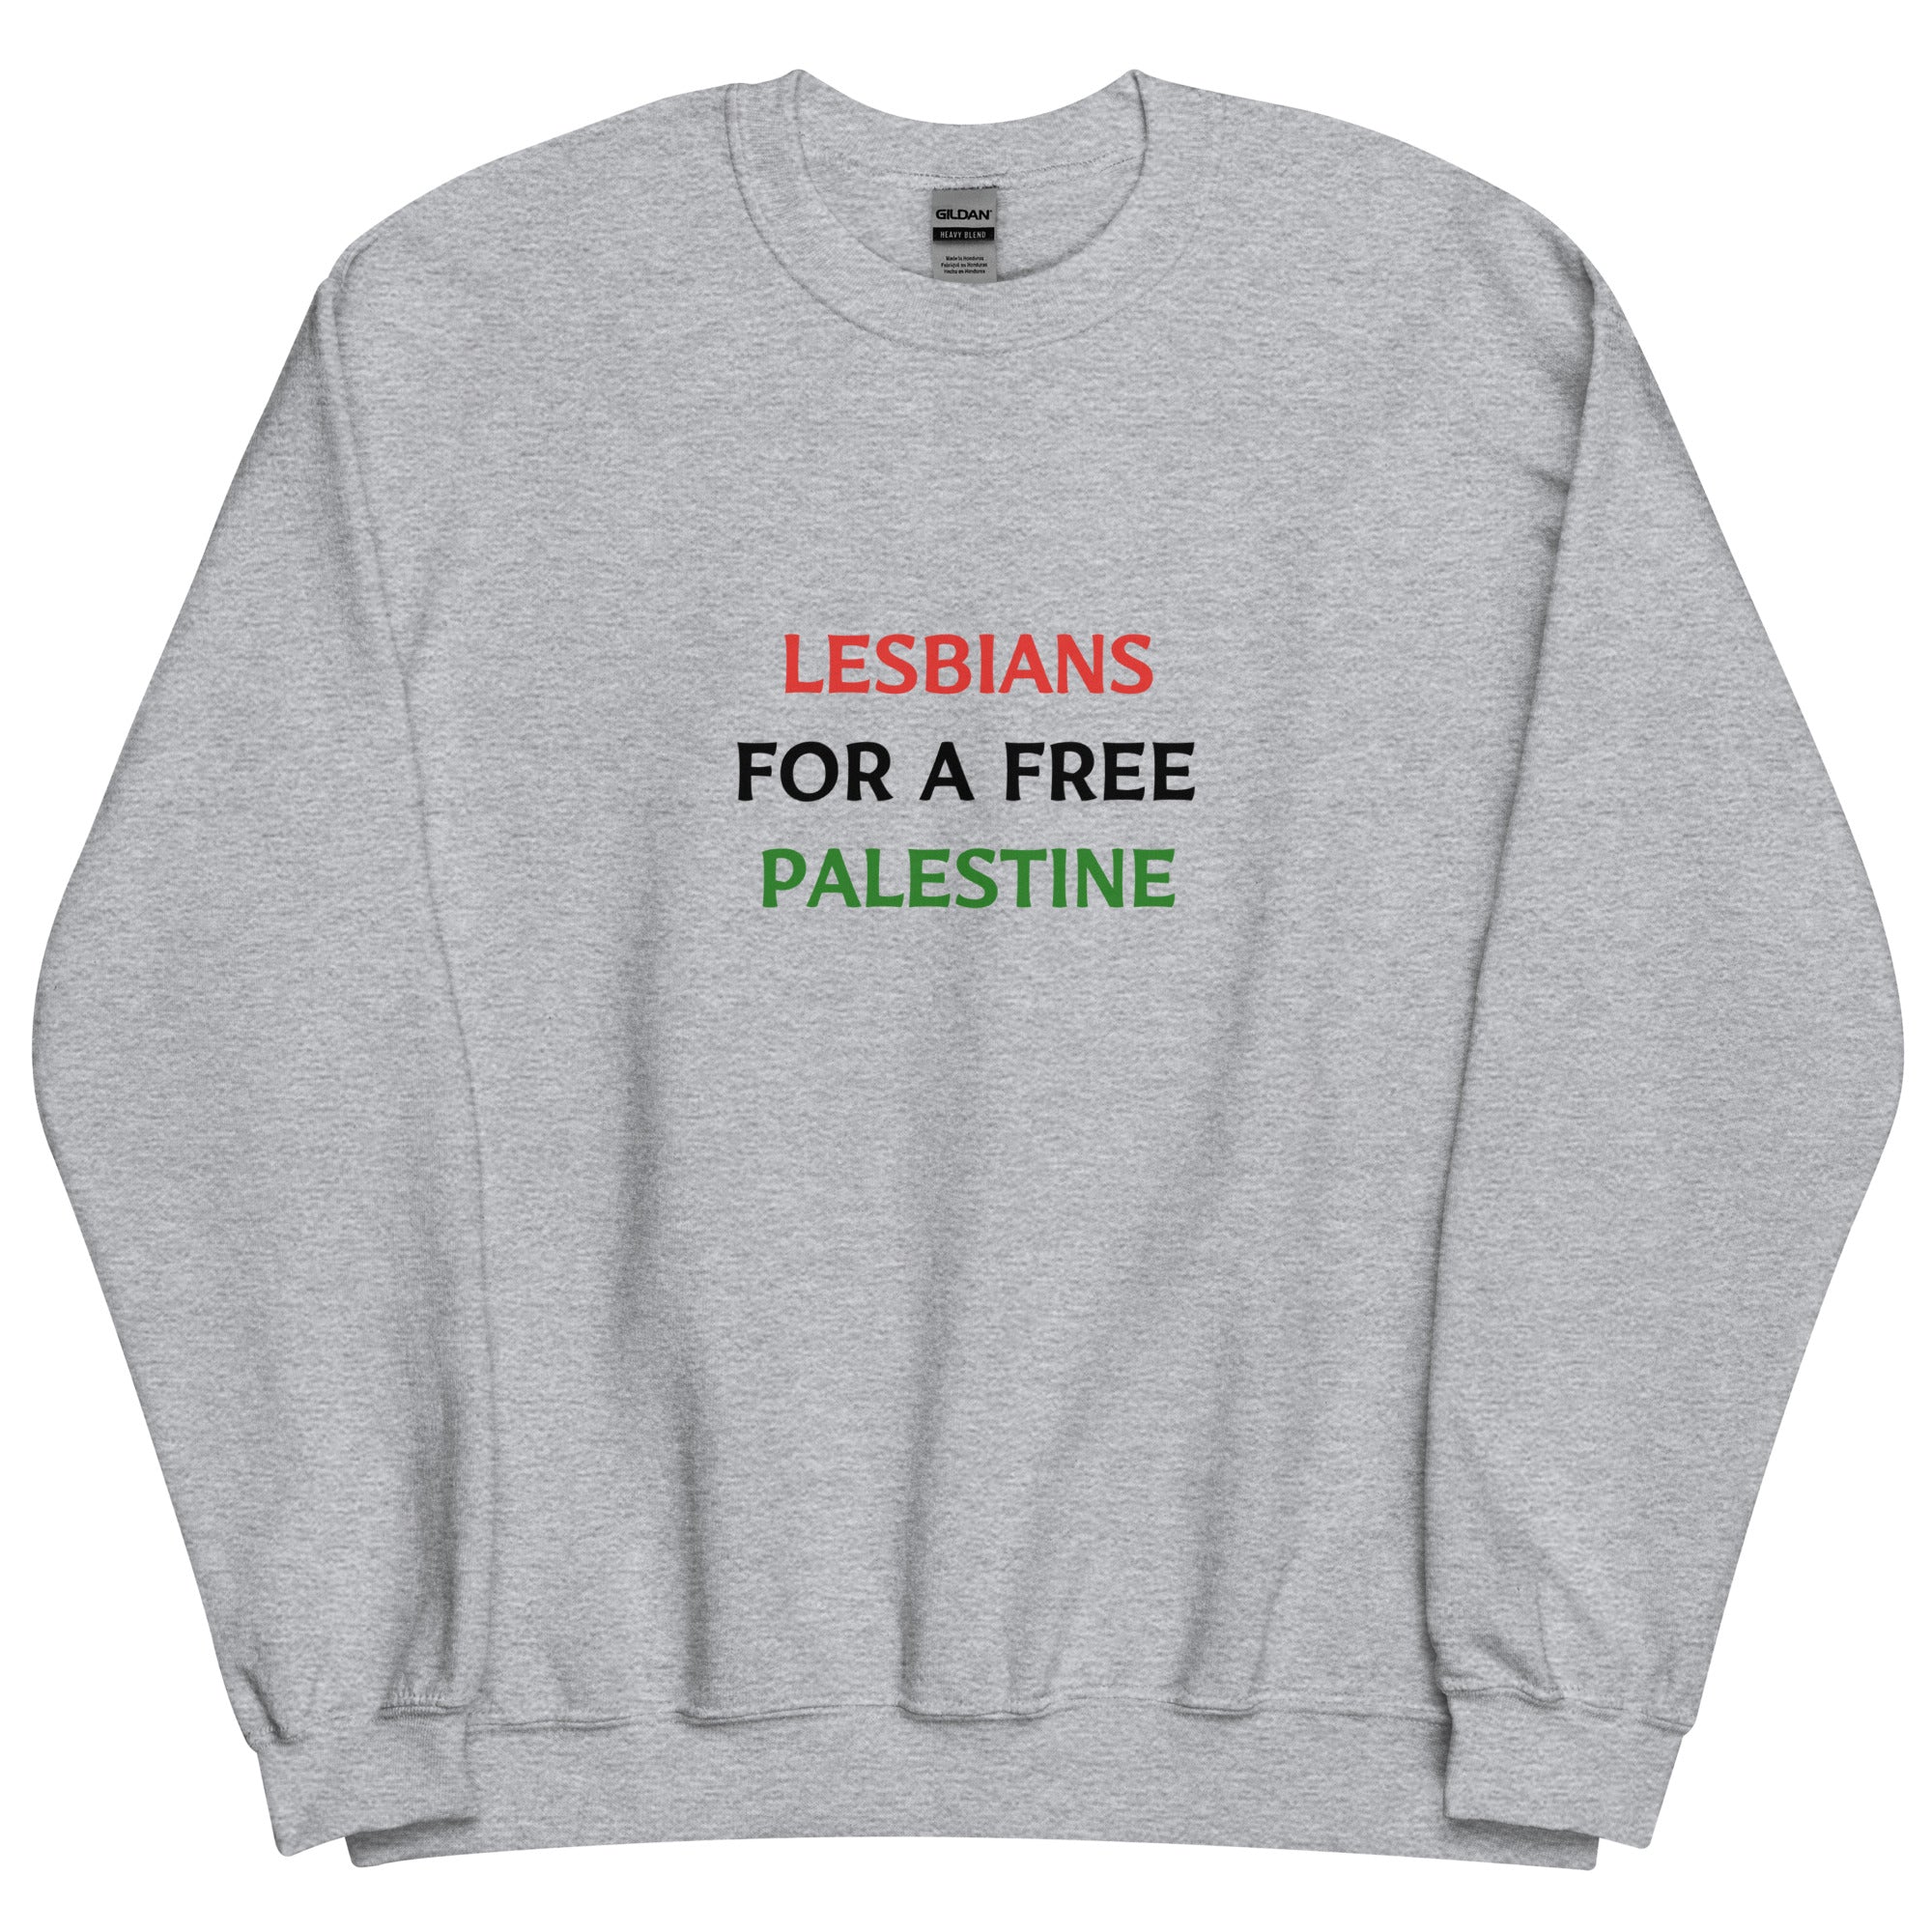 LESBIANS FOR A FREE PALESTINE sweatshirt